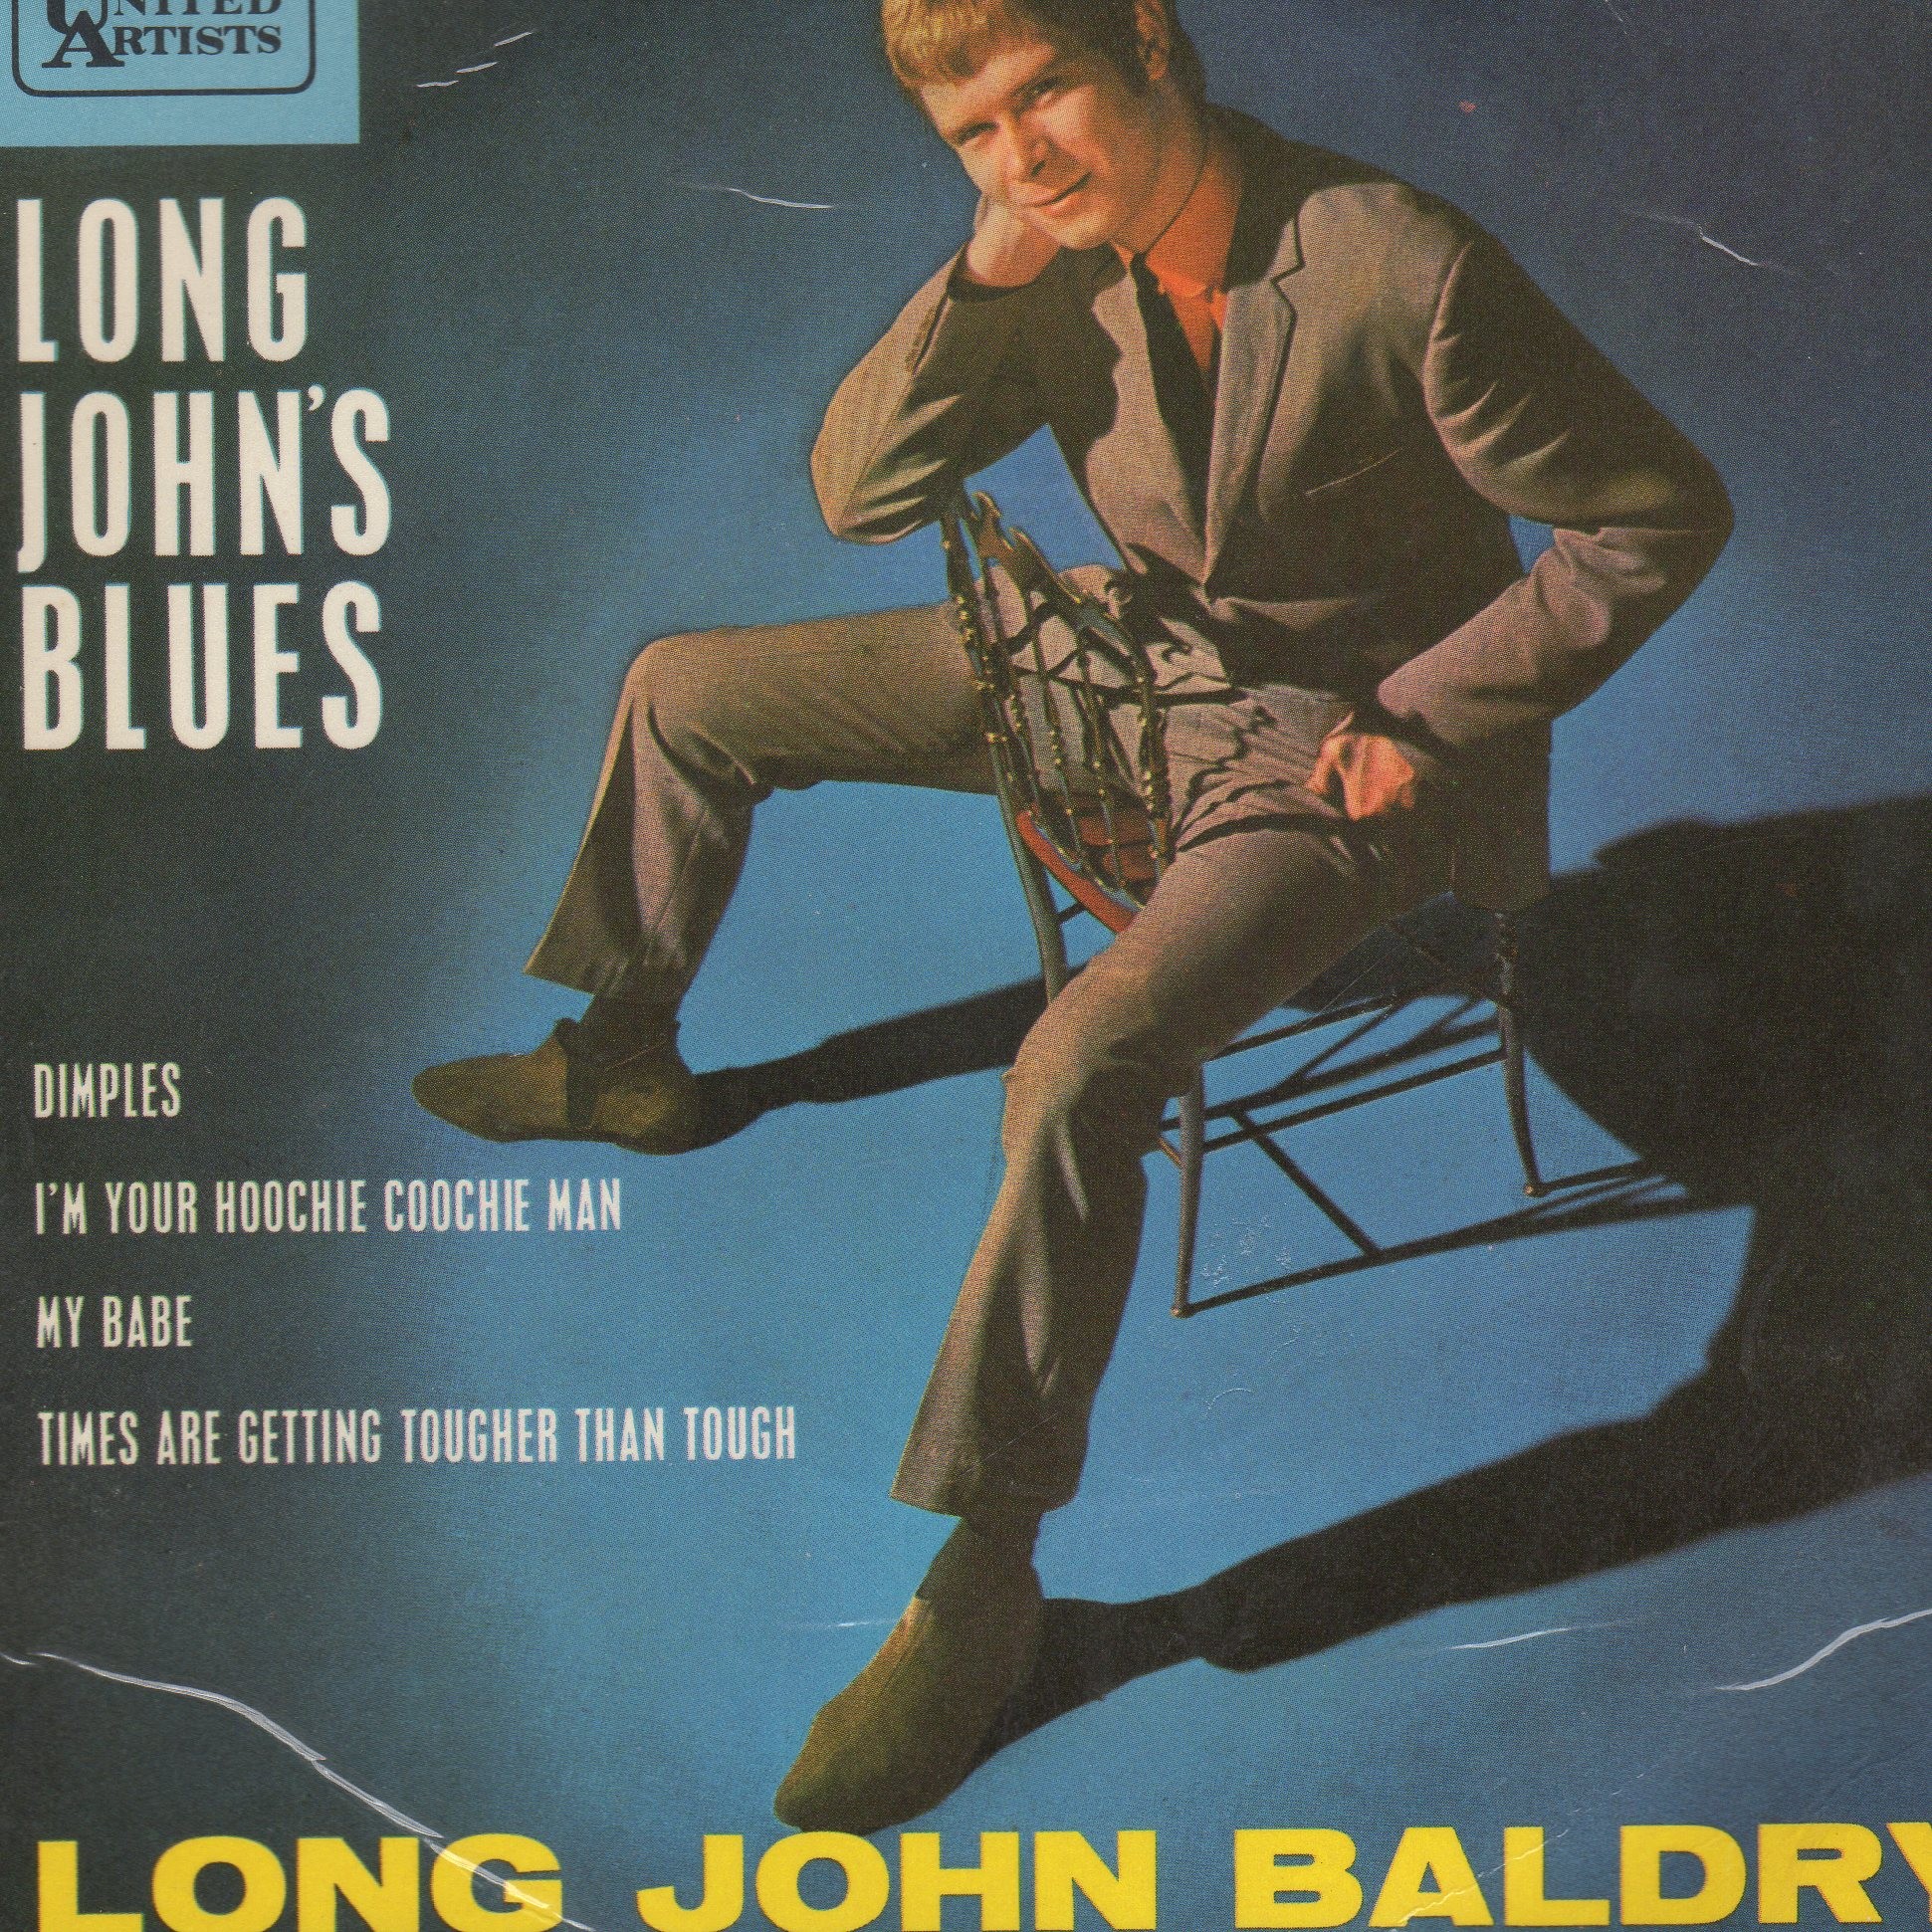 Long John's Blues EP